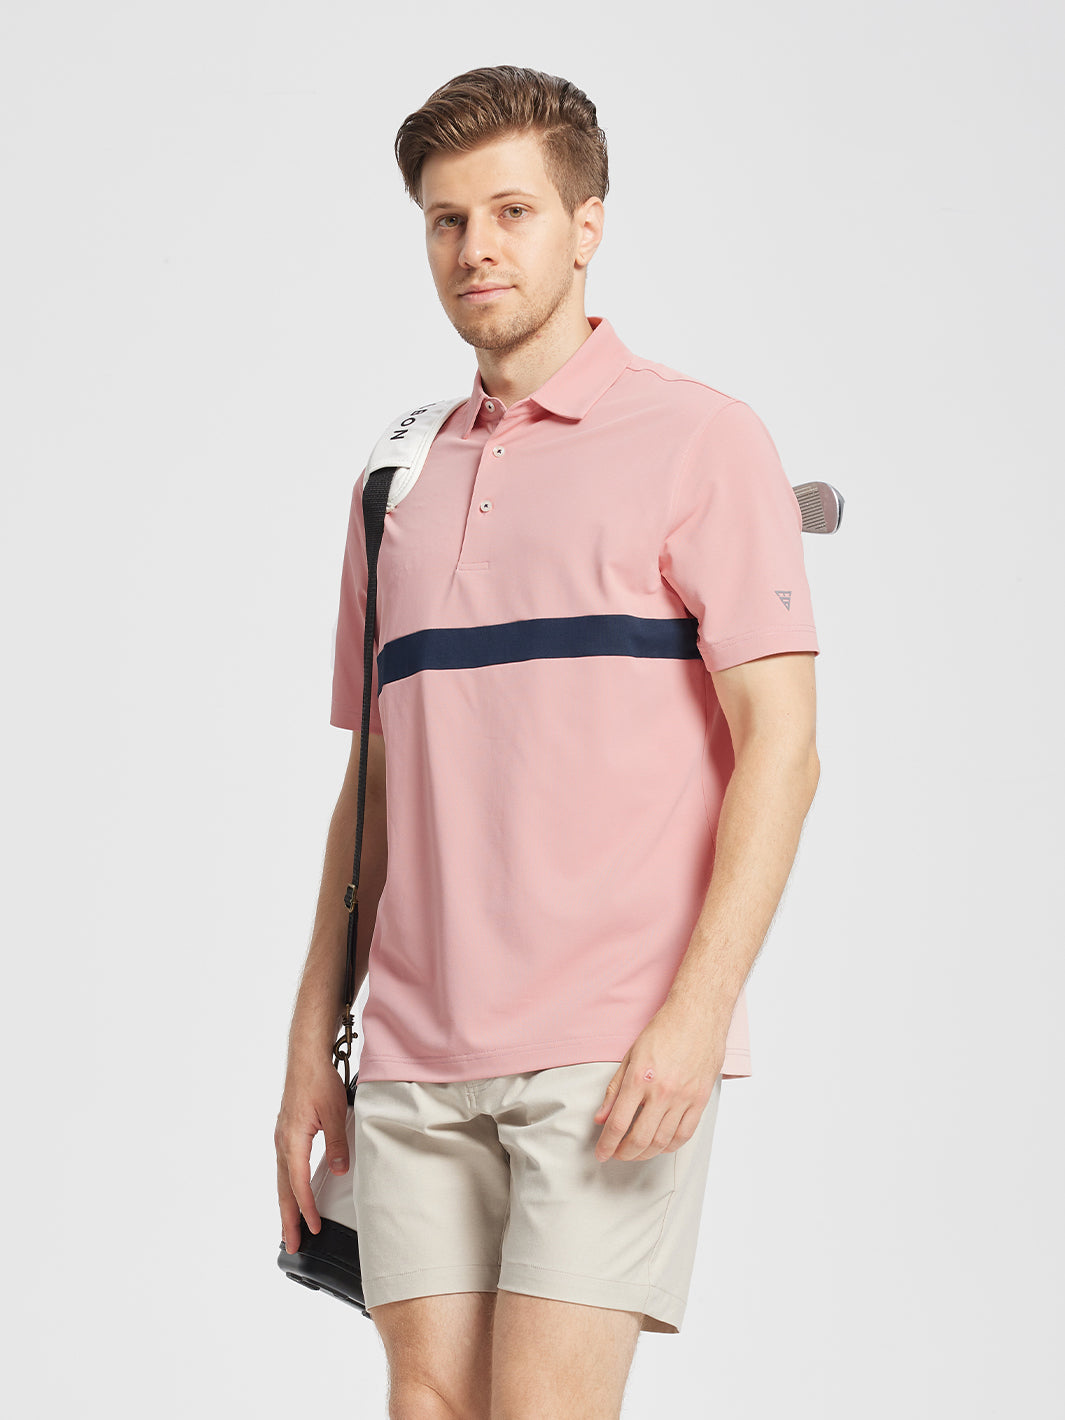 Men's Dry Fit Pique Golf Shirts-Pale Pink